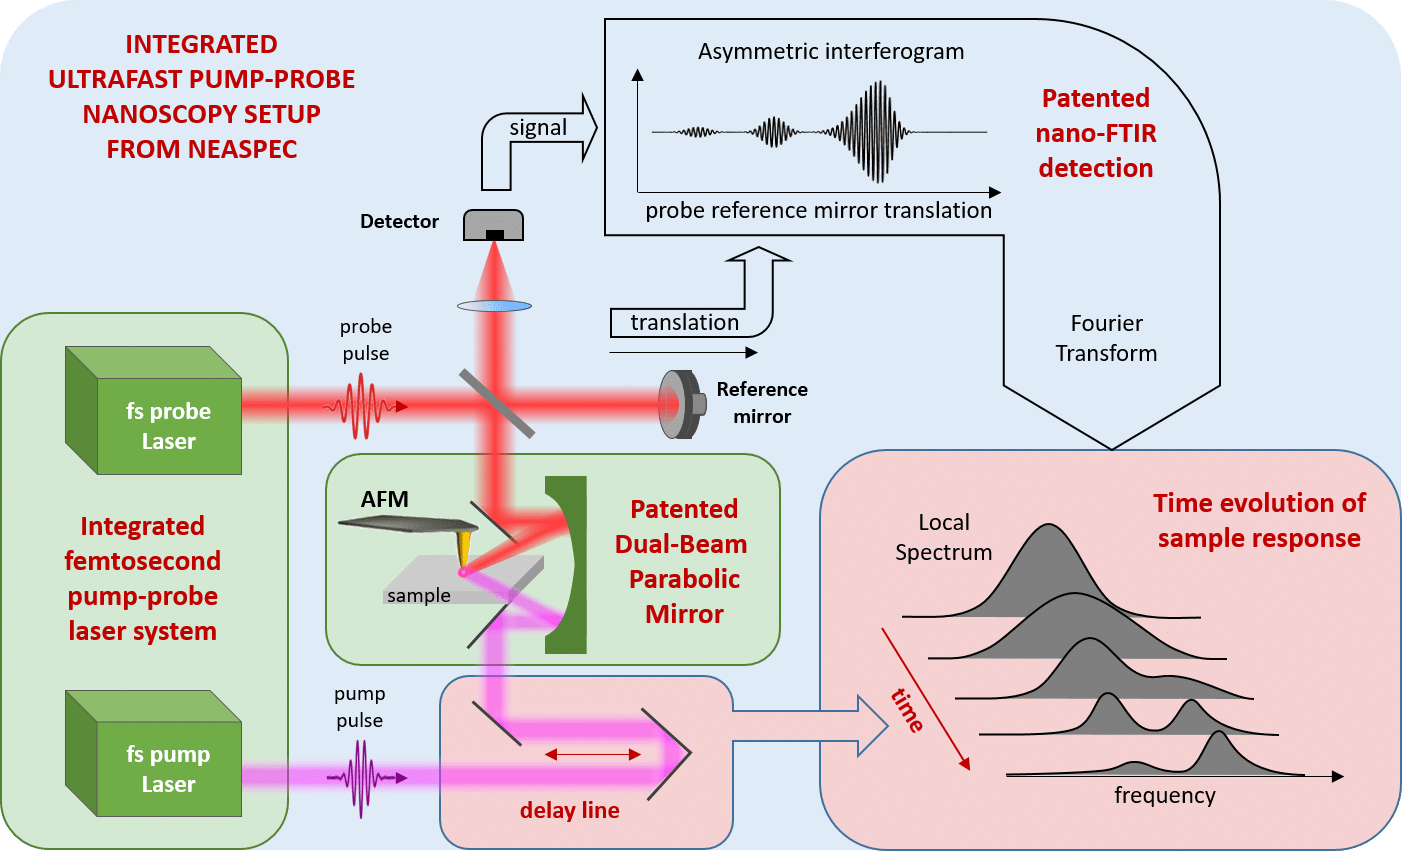 neaspec's ultrafast pump-probe nanoscopy